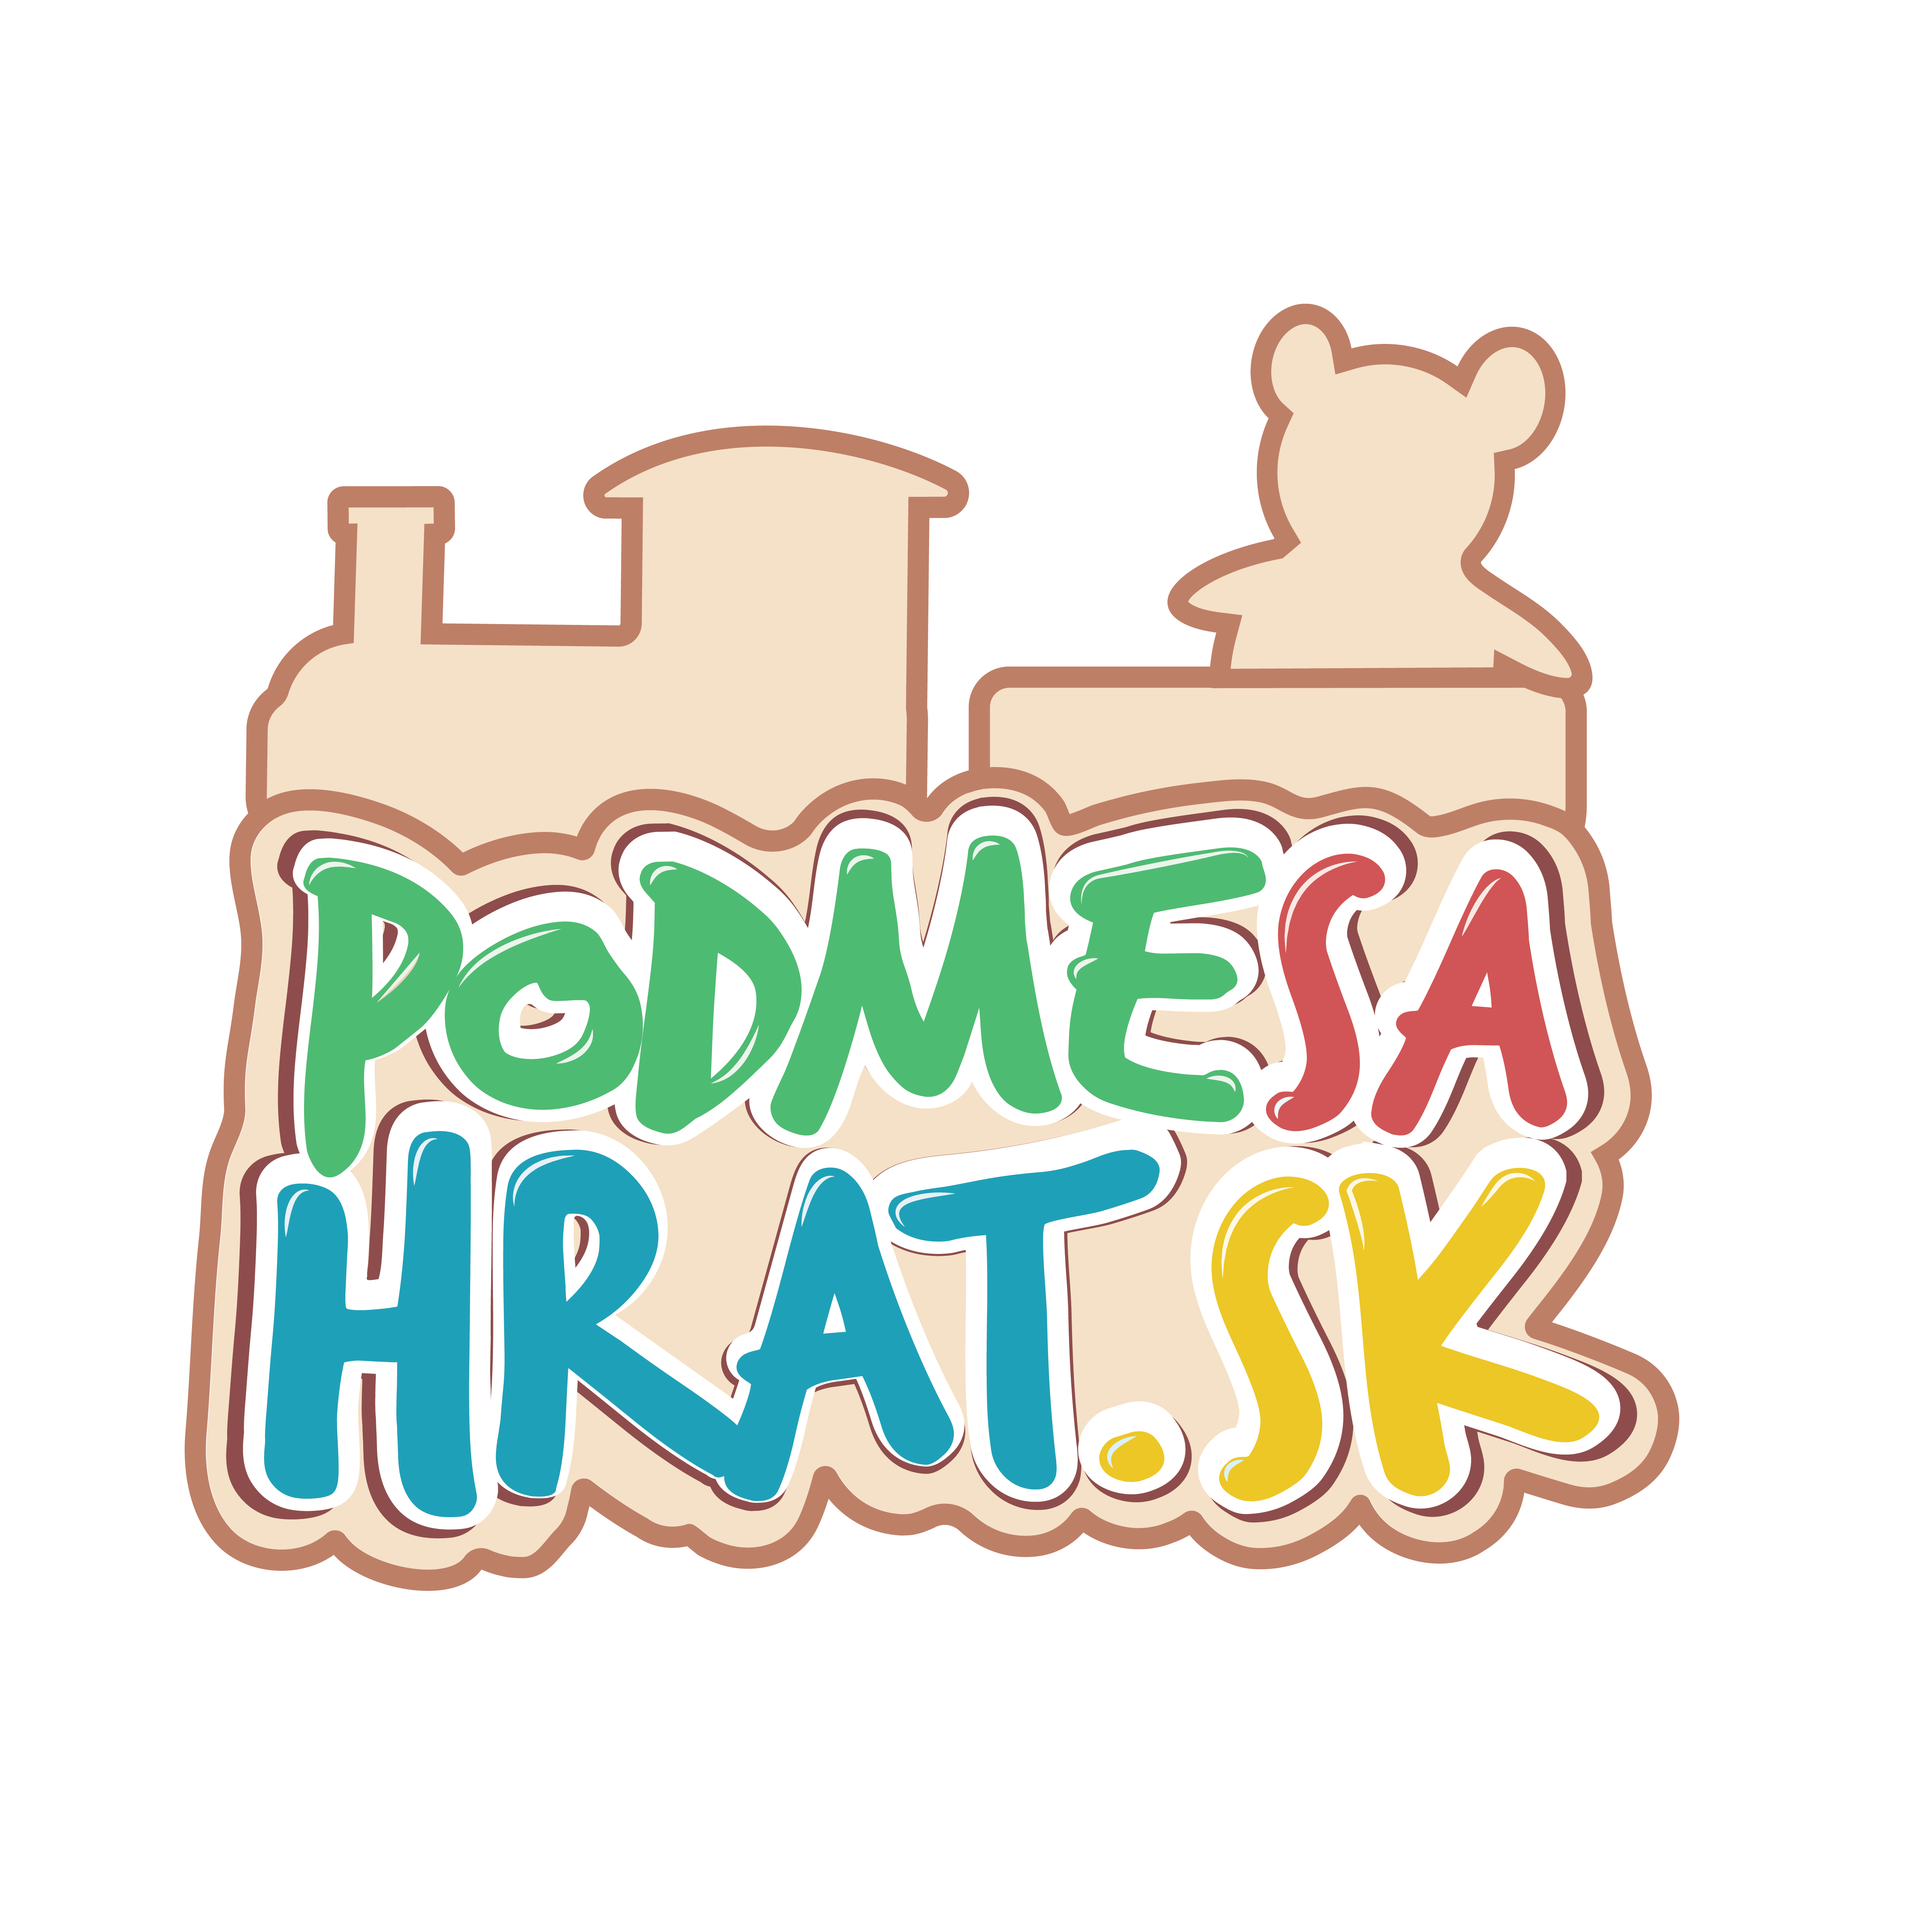 Podmesahrat.sk